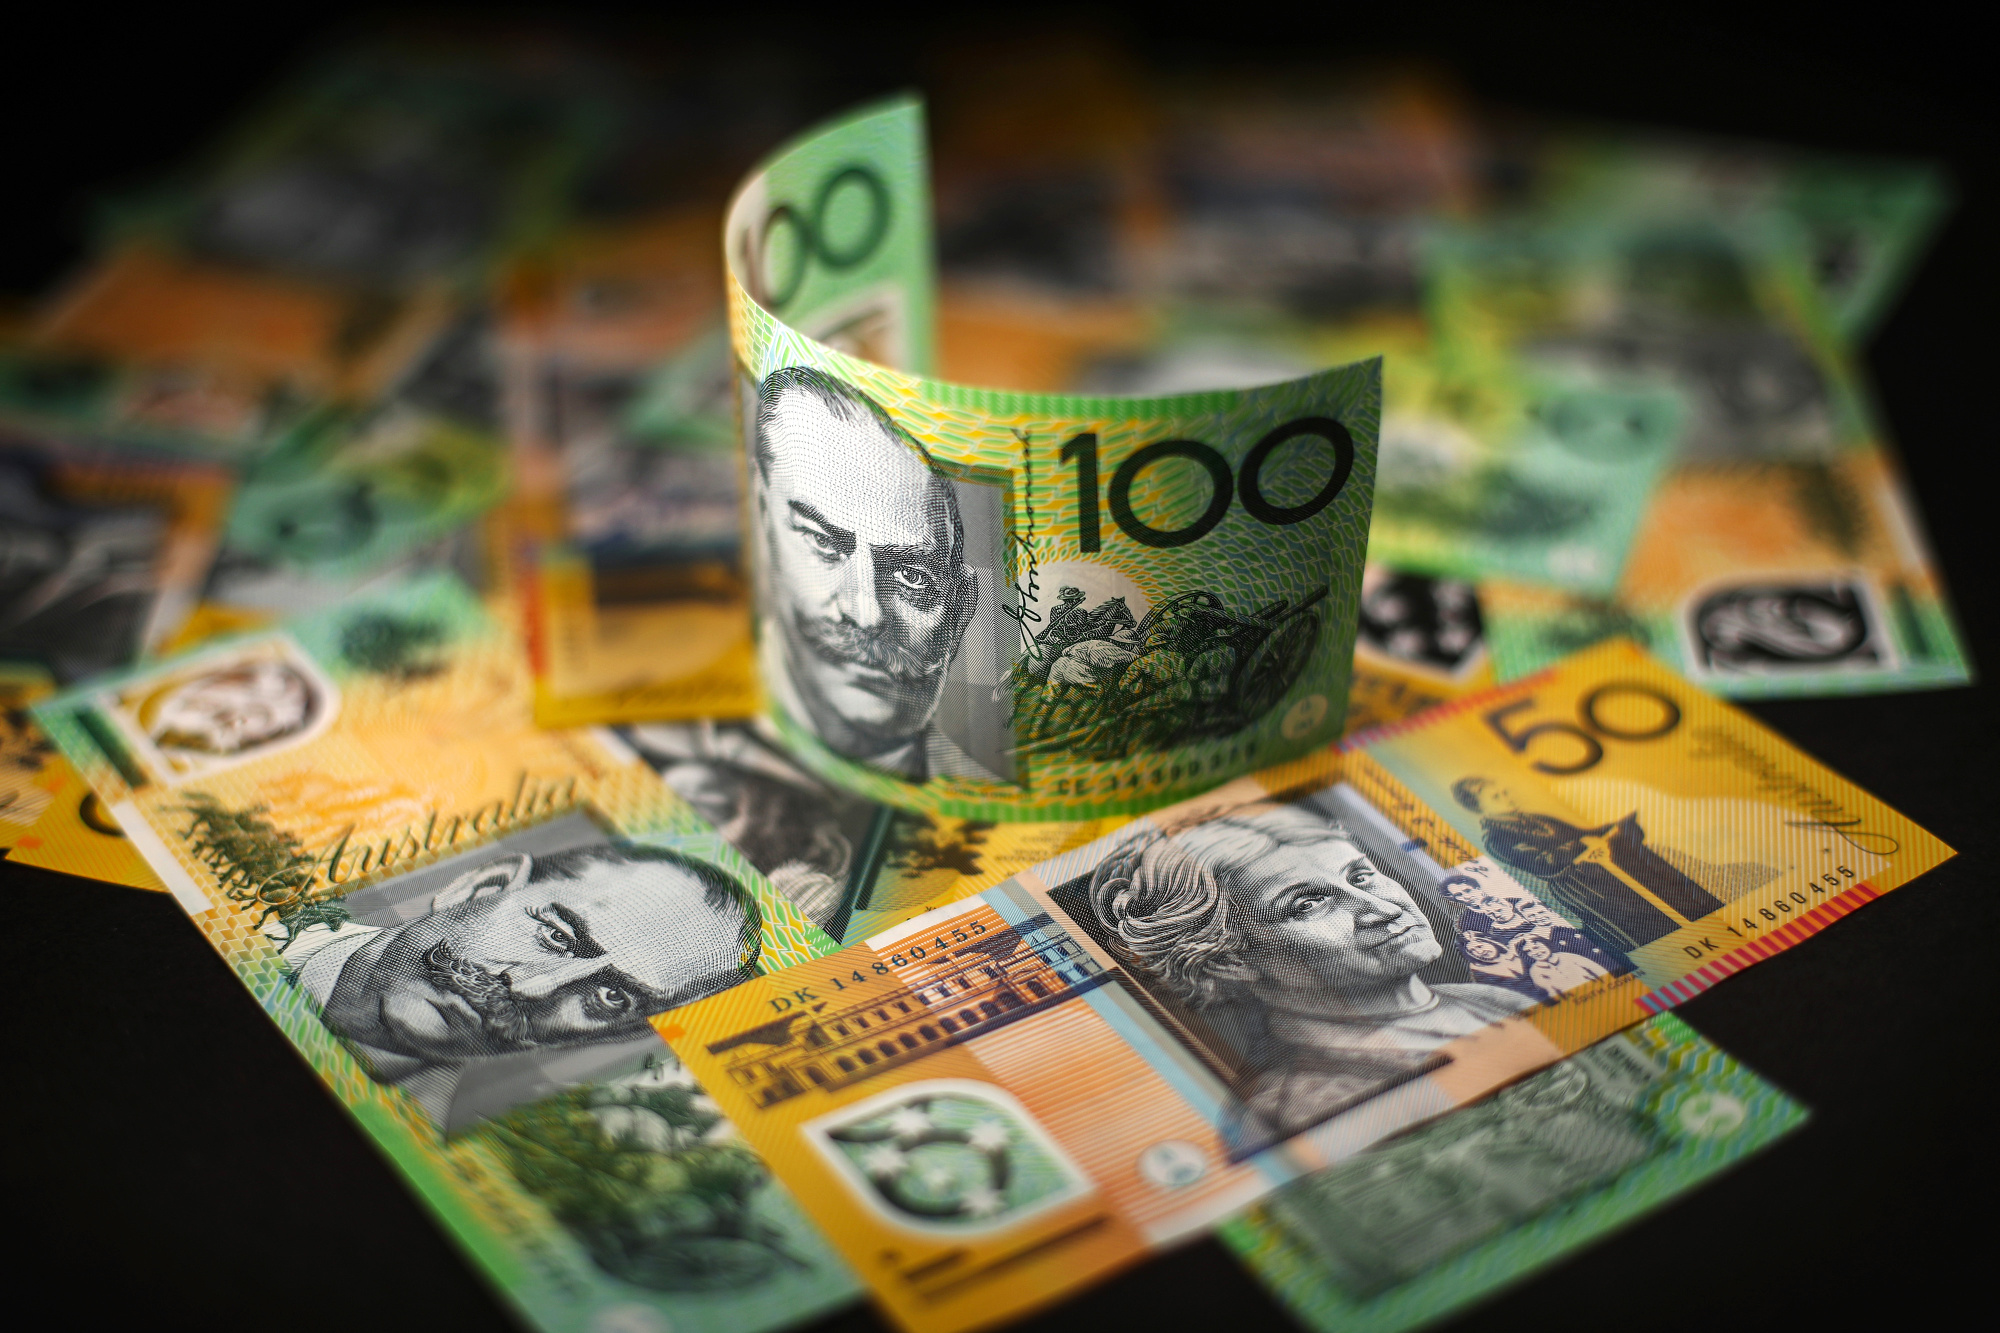 Australian May Fall 66 U.S. Cents, HSBC Says - Bloomberg